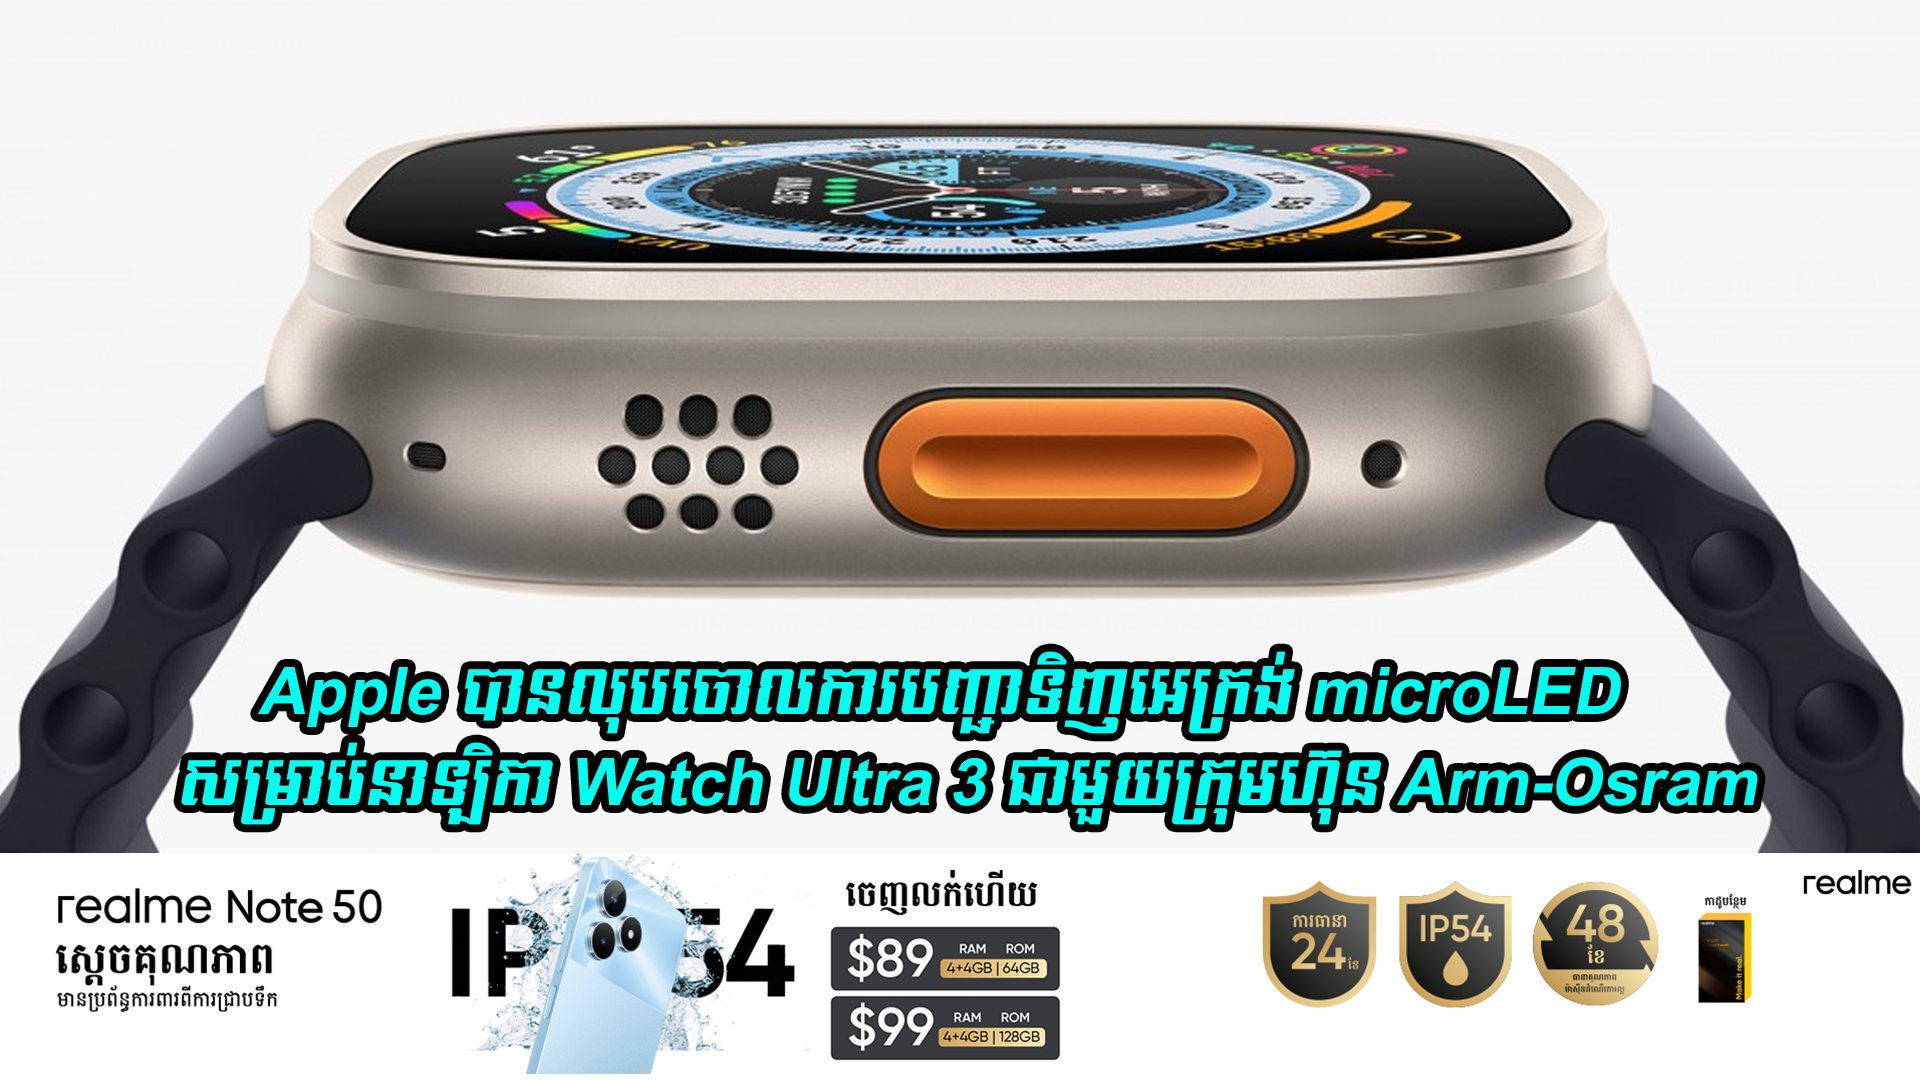 Apple បានលុបចោលការបញ្ជាទិញអេក្រង់ microLED សម្រាប់នាឡិកា Watch Ultra 3 ជាមួយក្រុមហ៊ុន arm-Osram